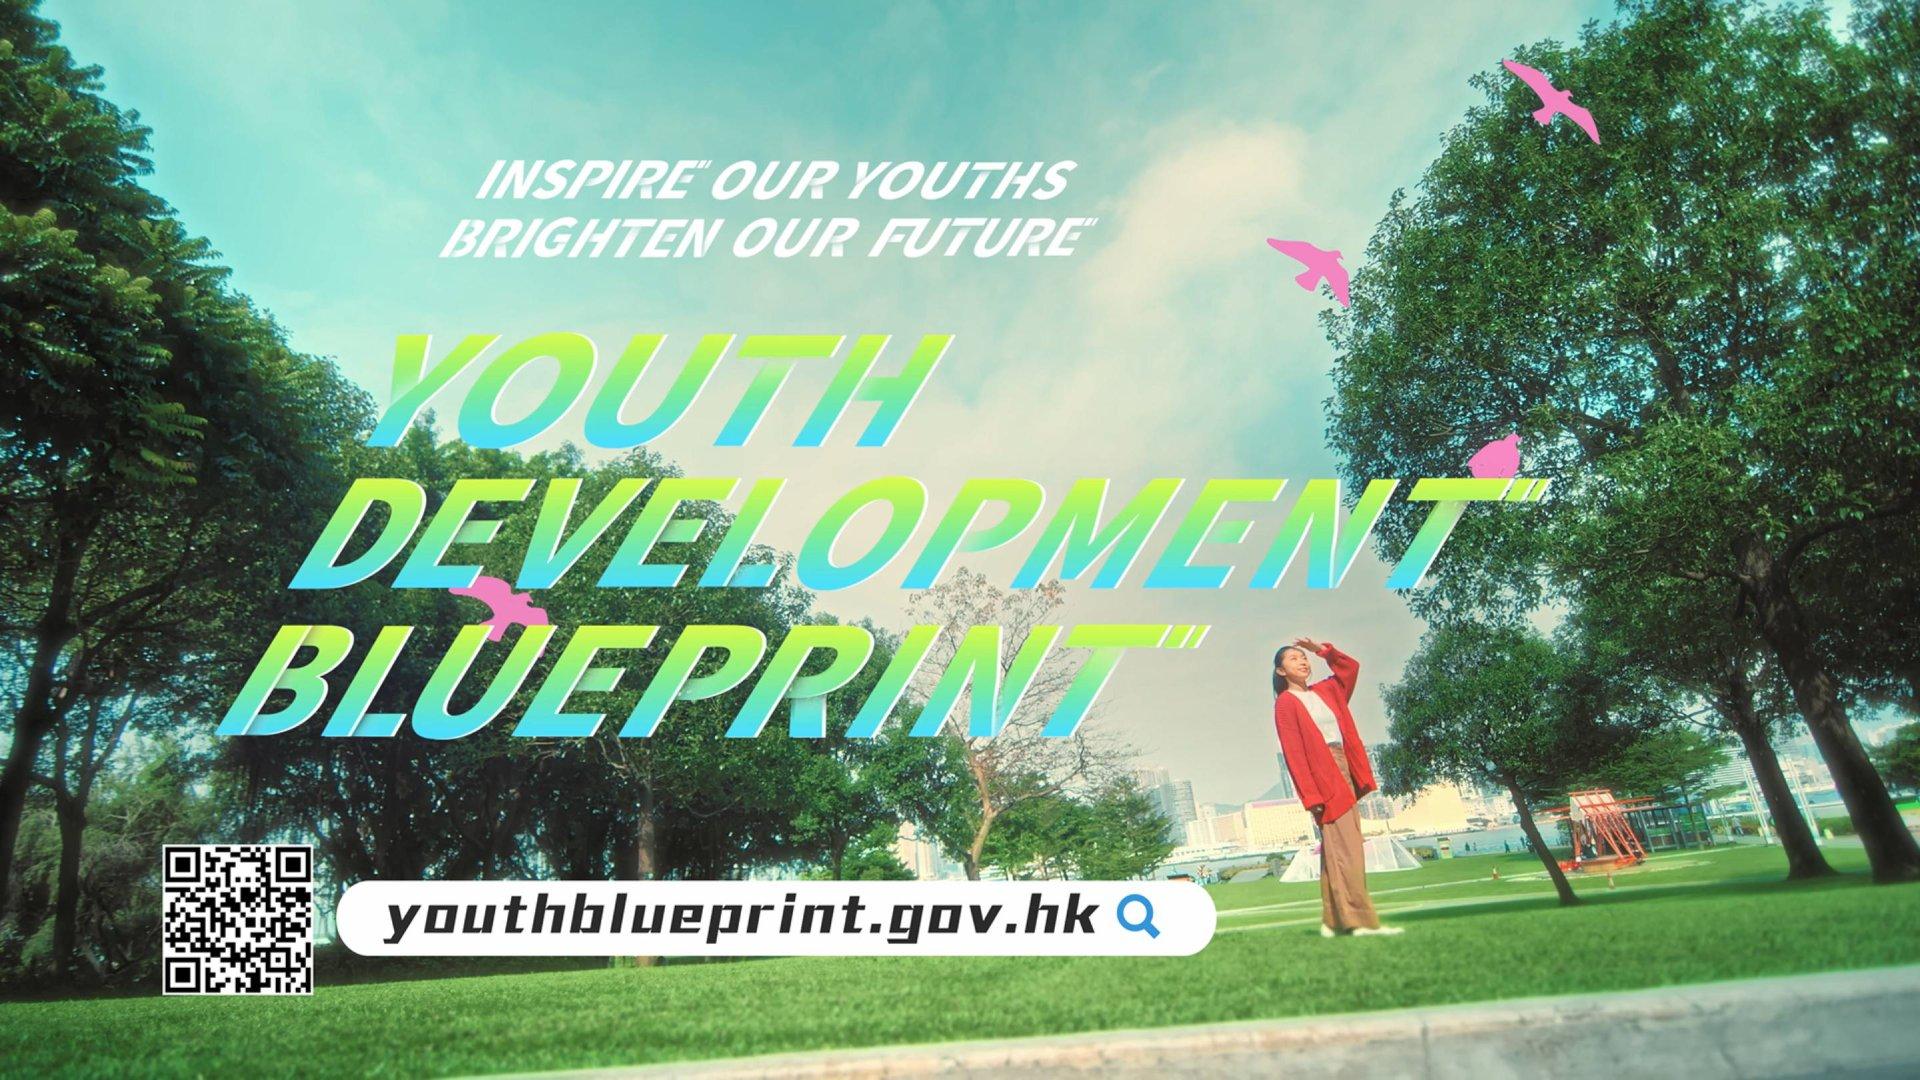 Youth Development Blueprint